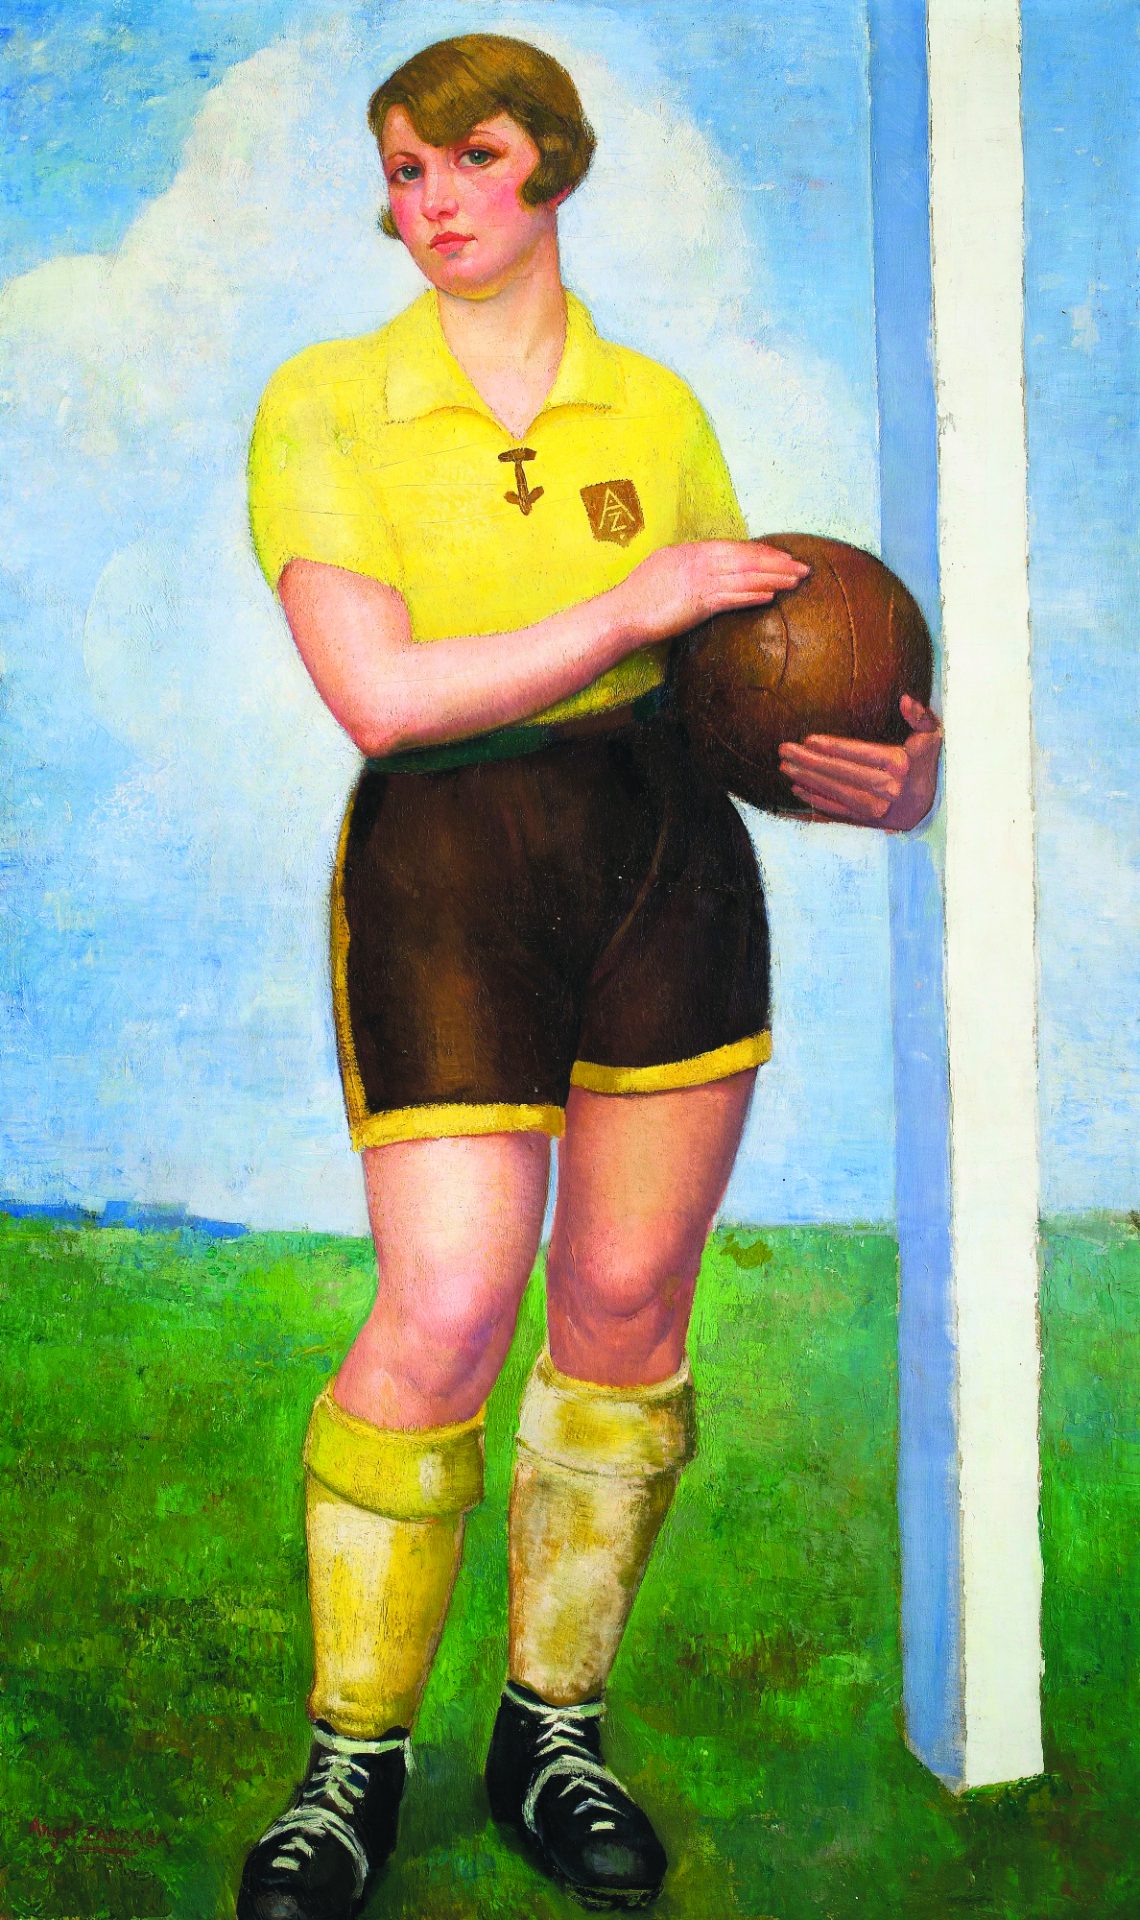 Zárraga. Retrato do artista enquanto futebolista